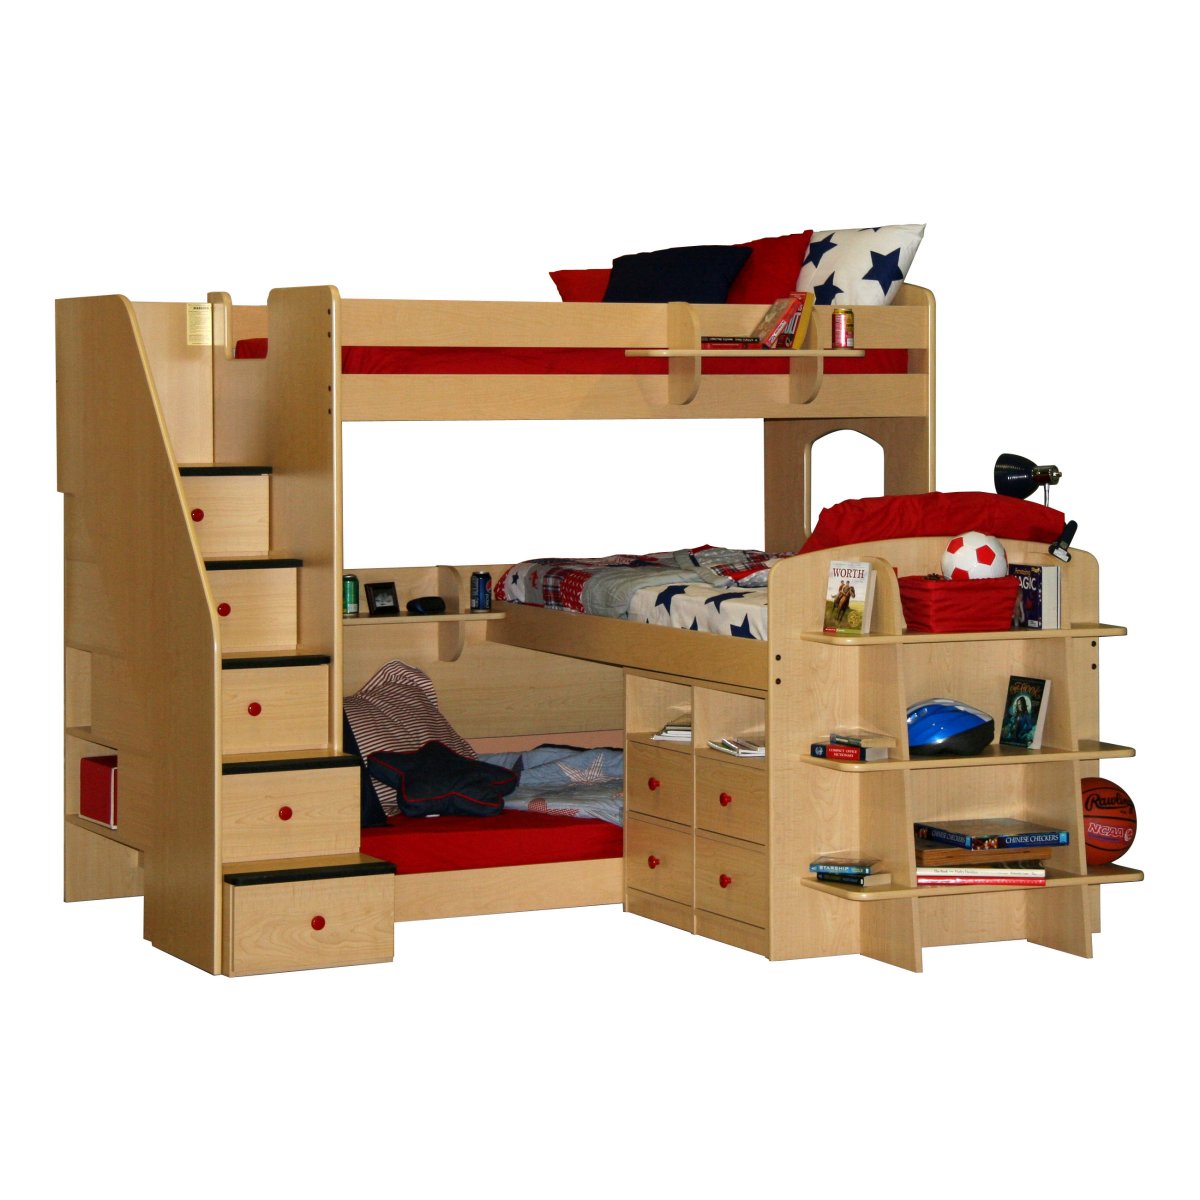  Bunk, Berg Furniture said I'll see your perpendicular bunk design and